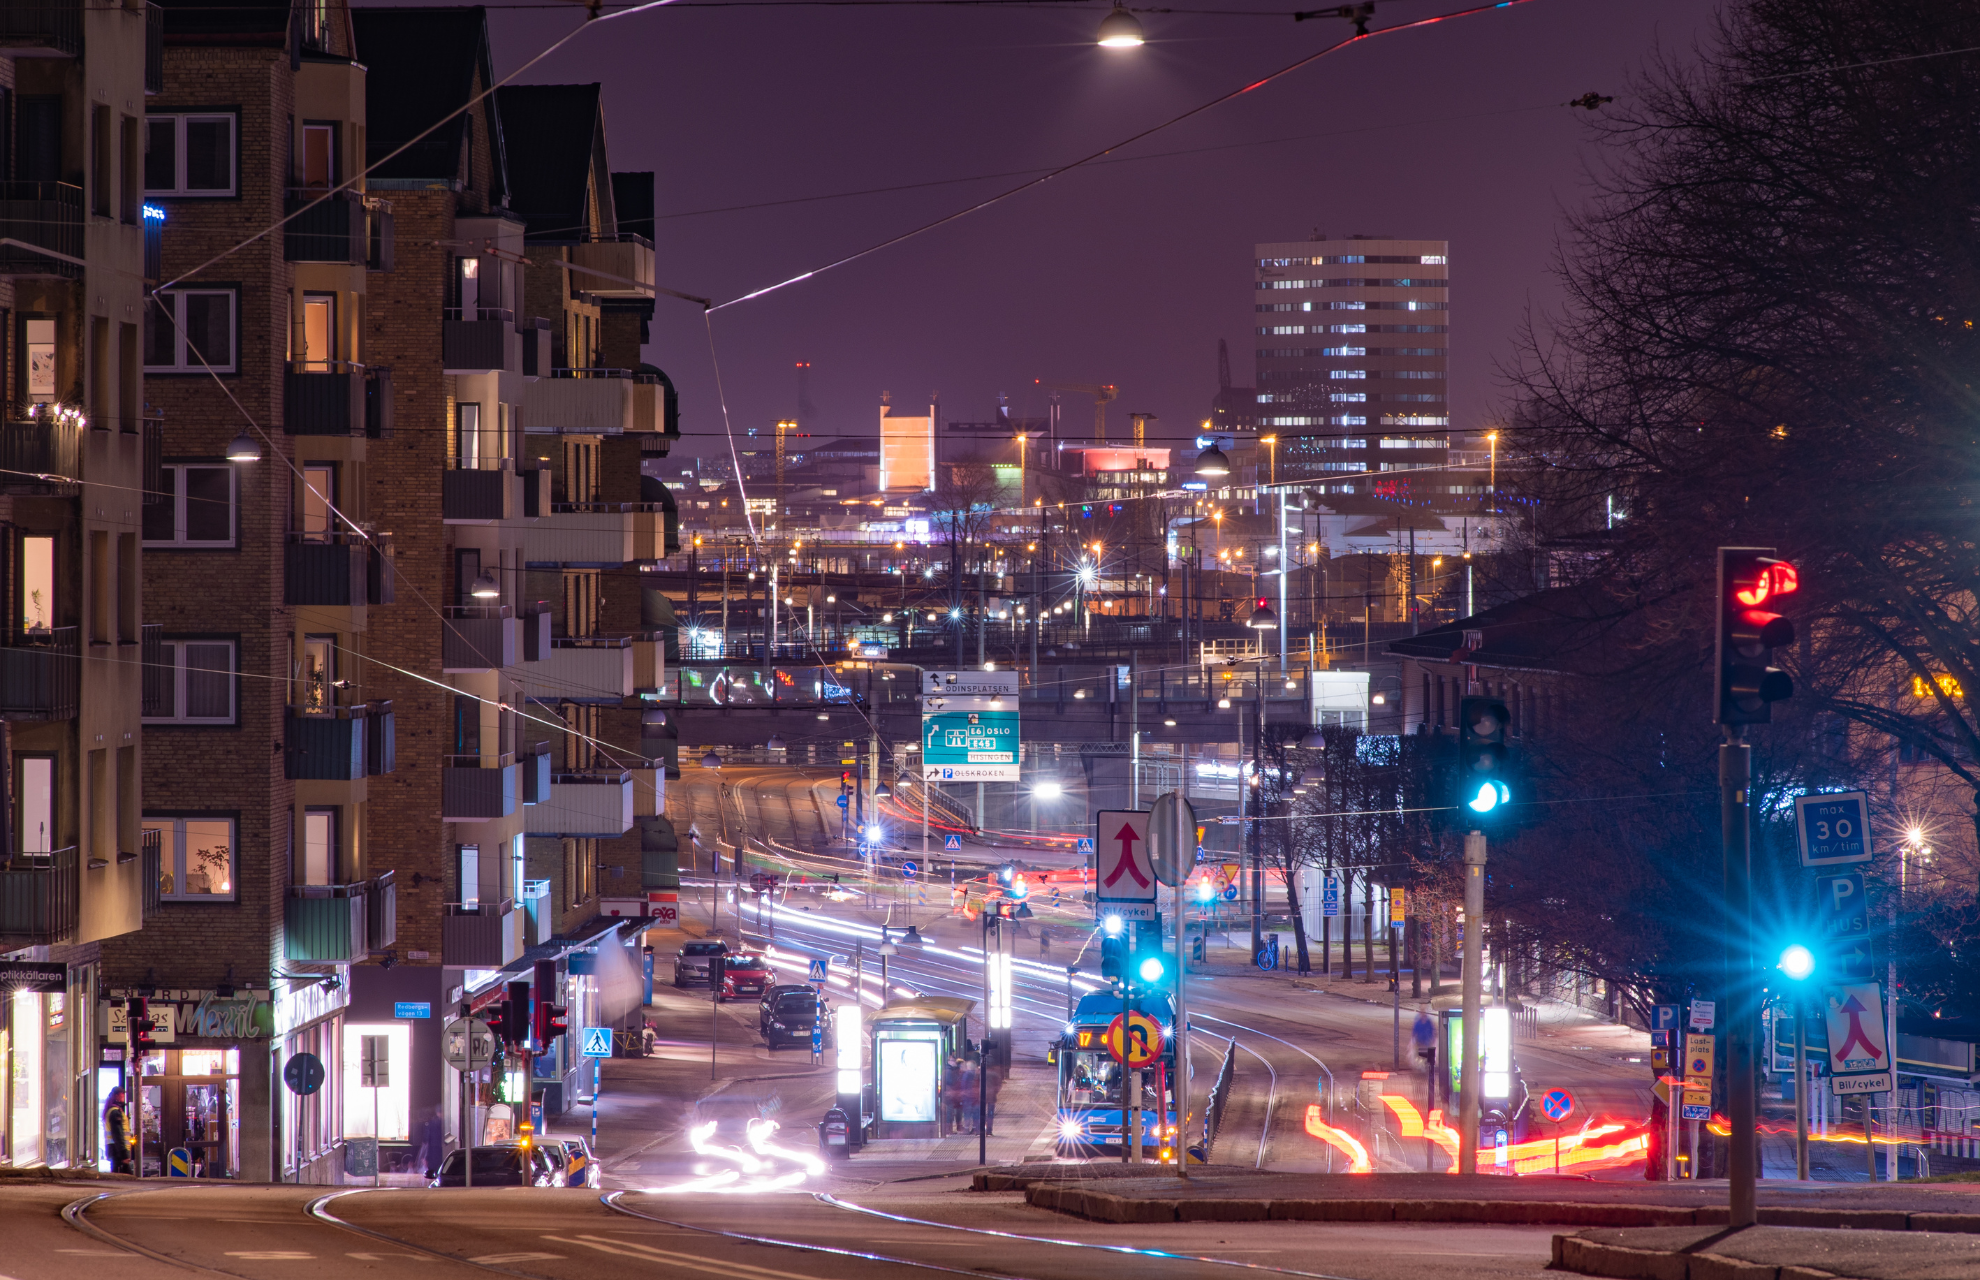 Elektronikåtervinning i Göteborg - Bild på gata i Göteborg